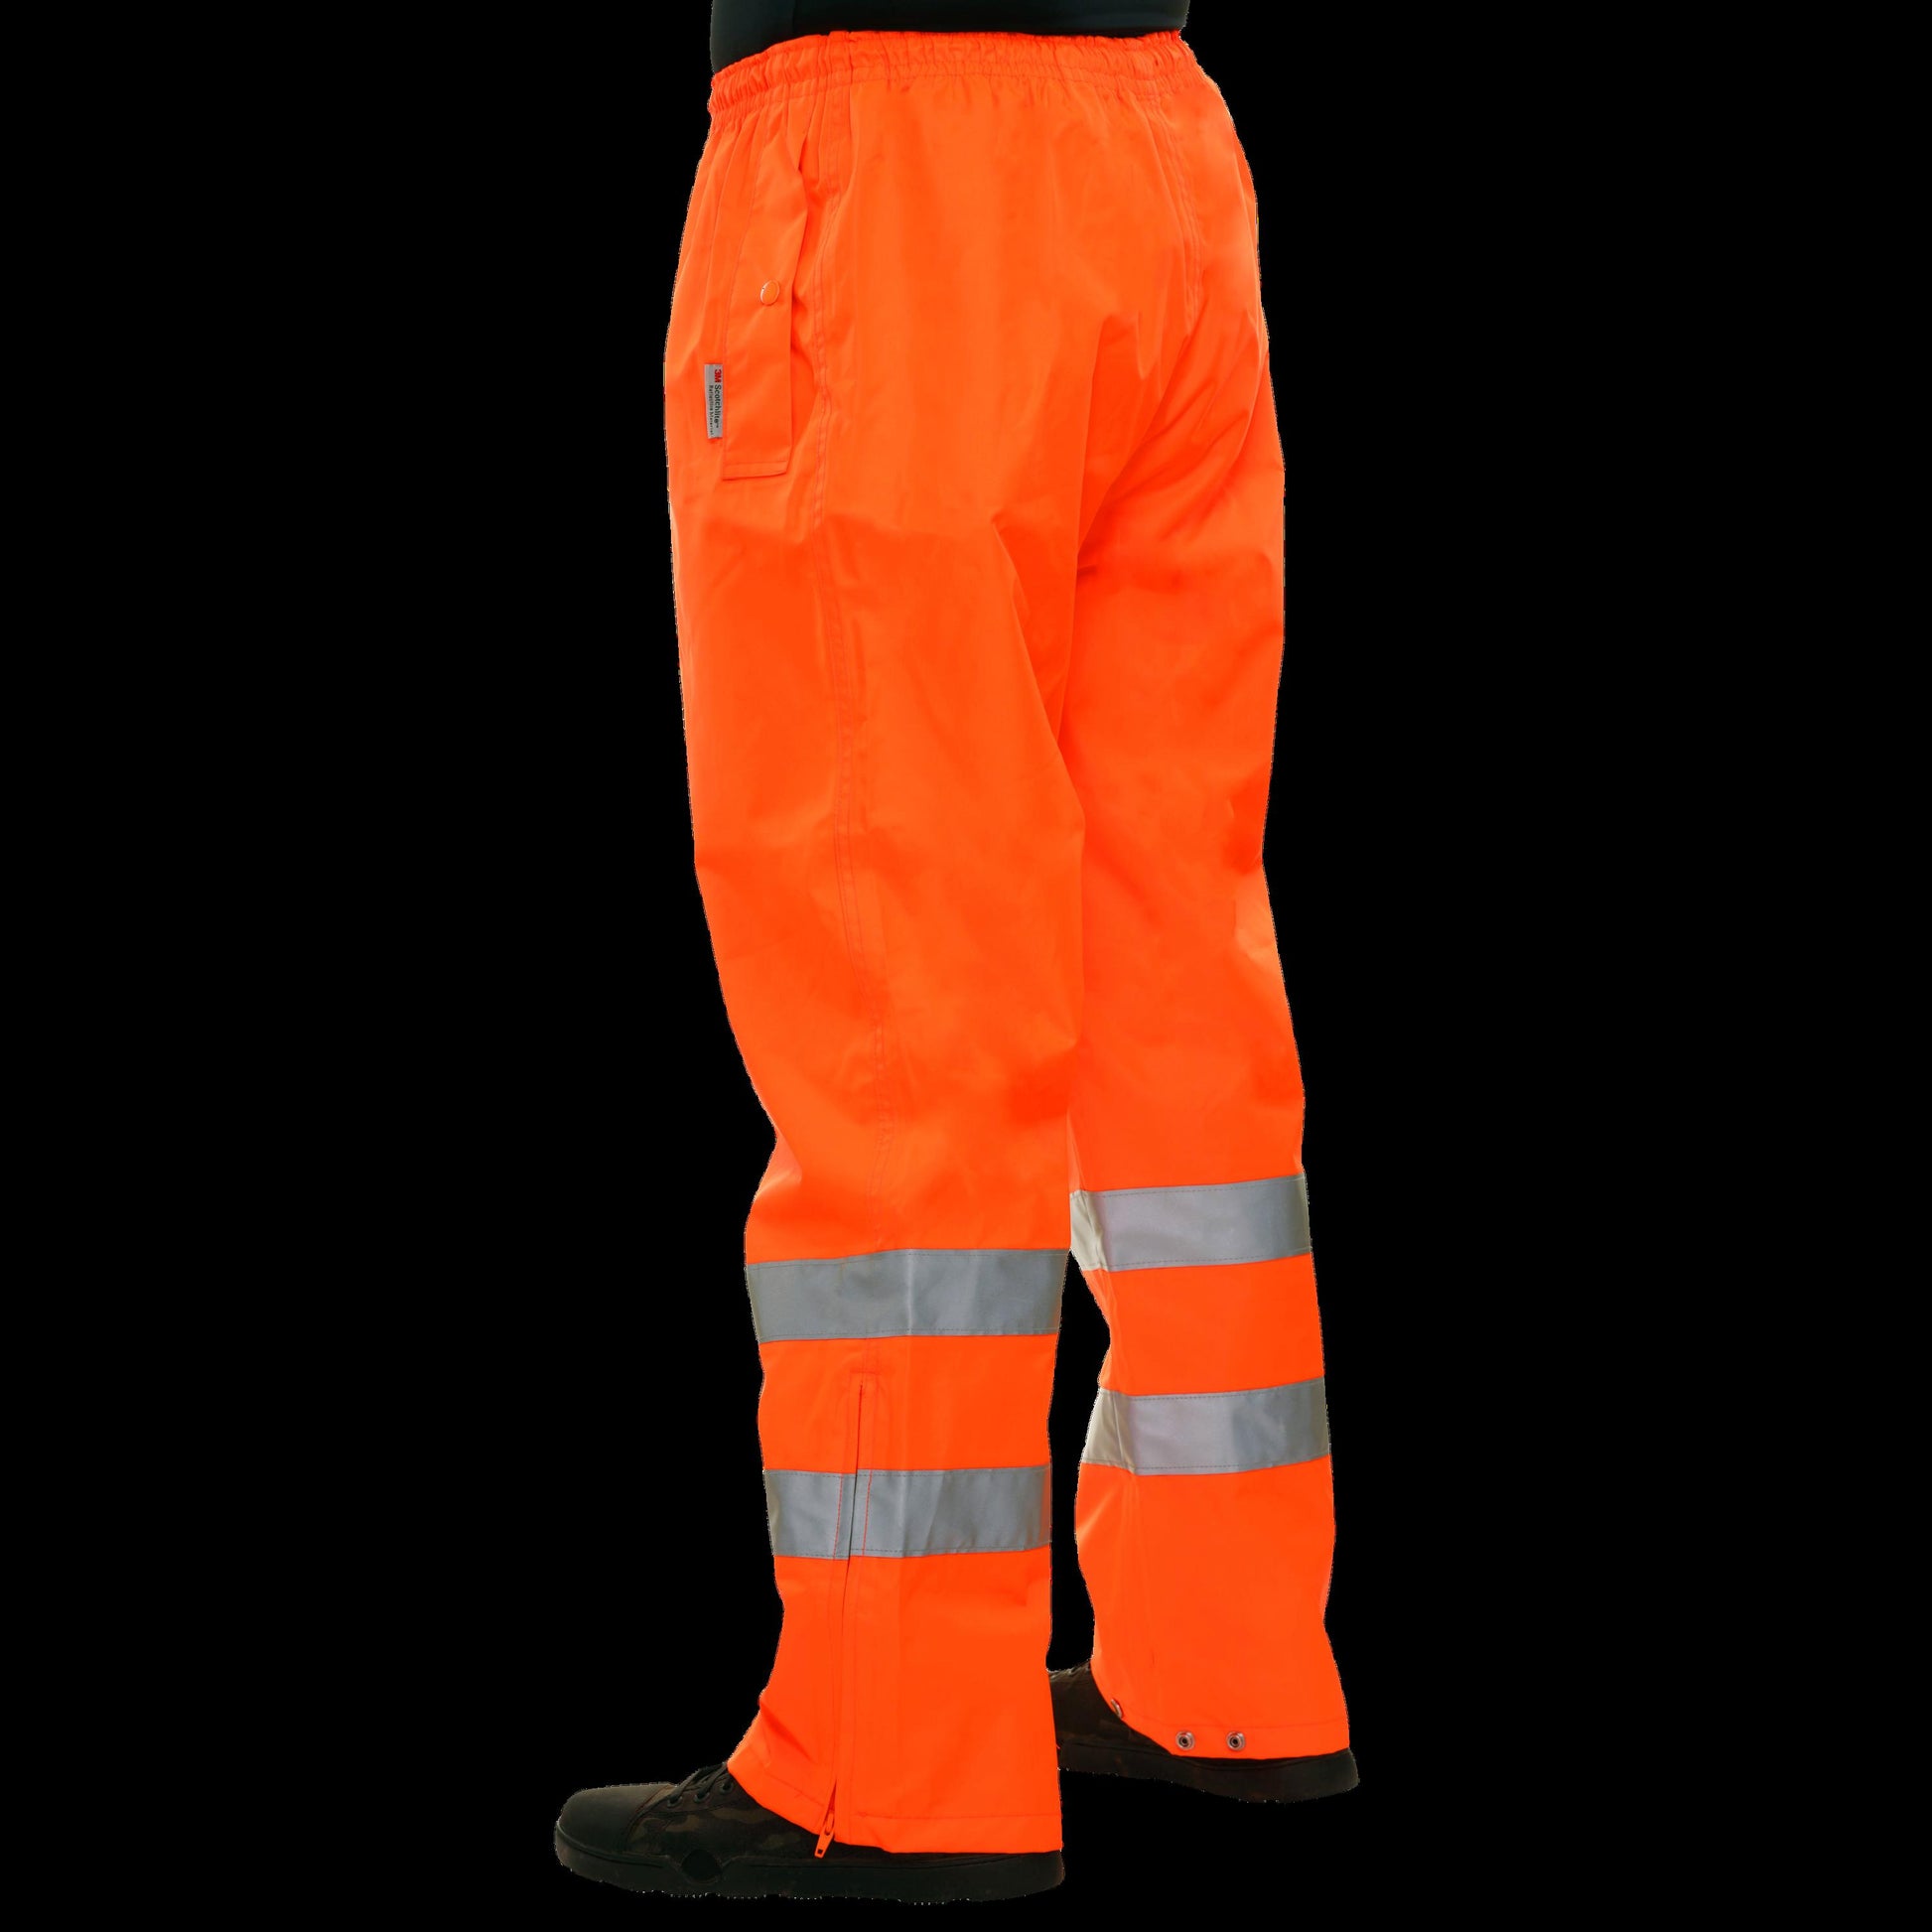 700STOR Safety Pants: Orange Hi Vis Waterproof – Reflective